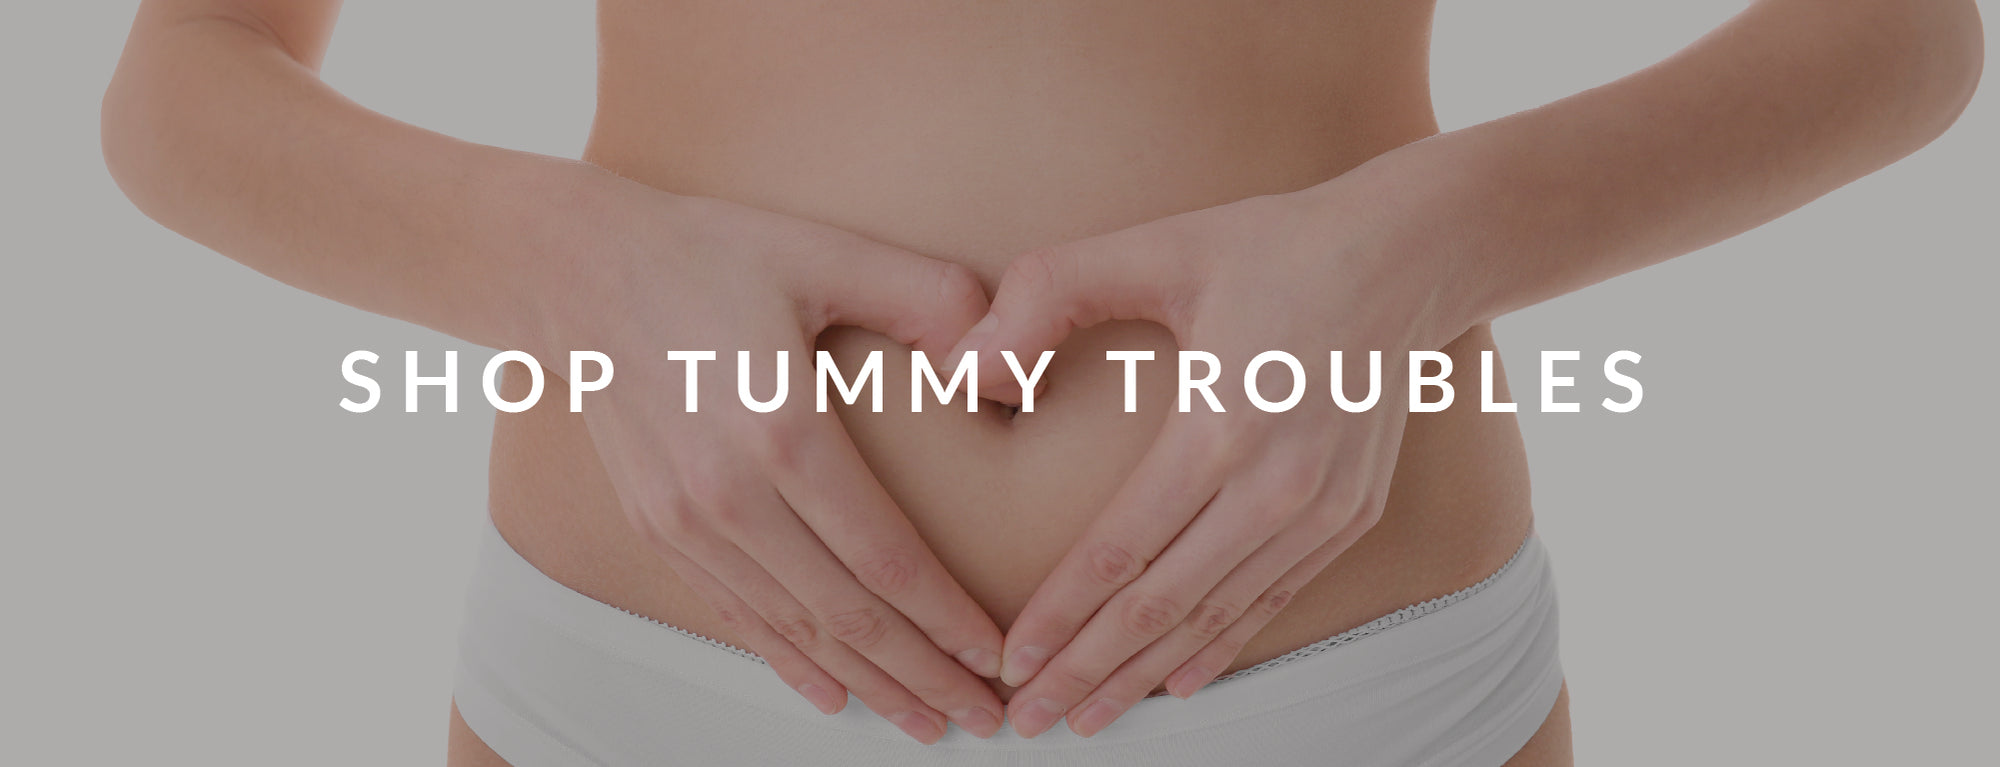 Tummy Troubles